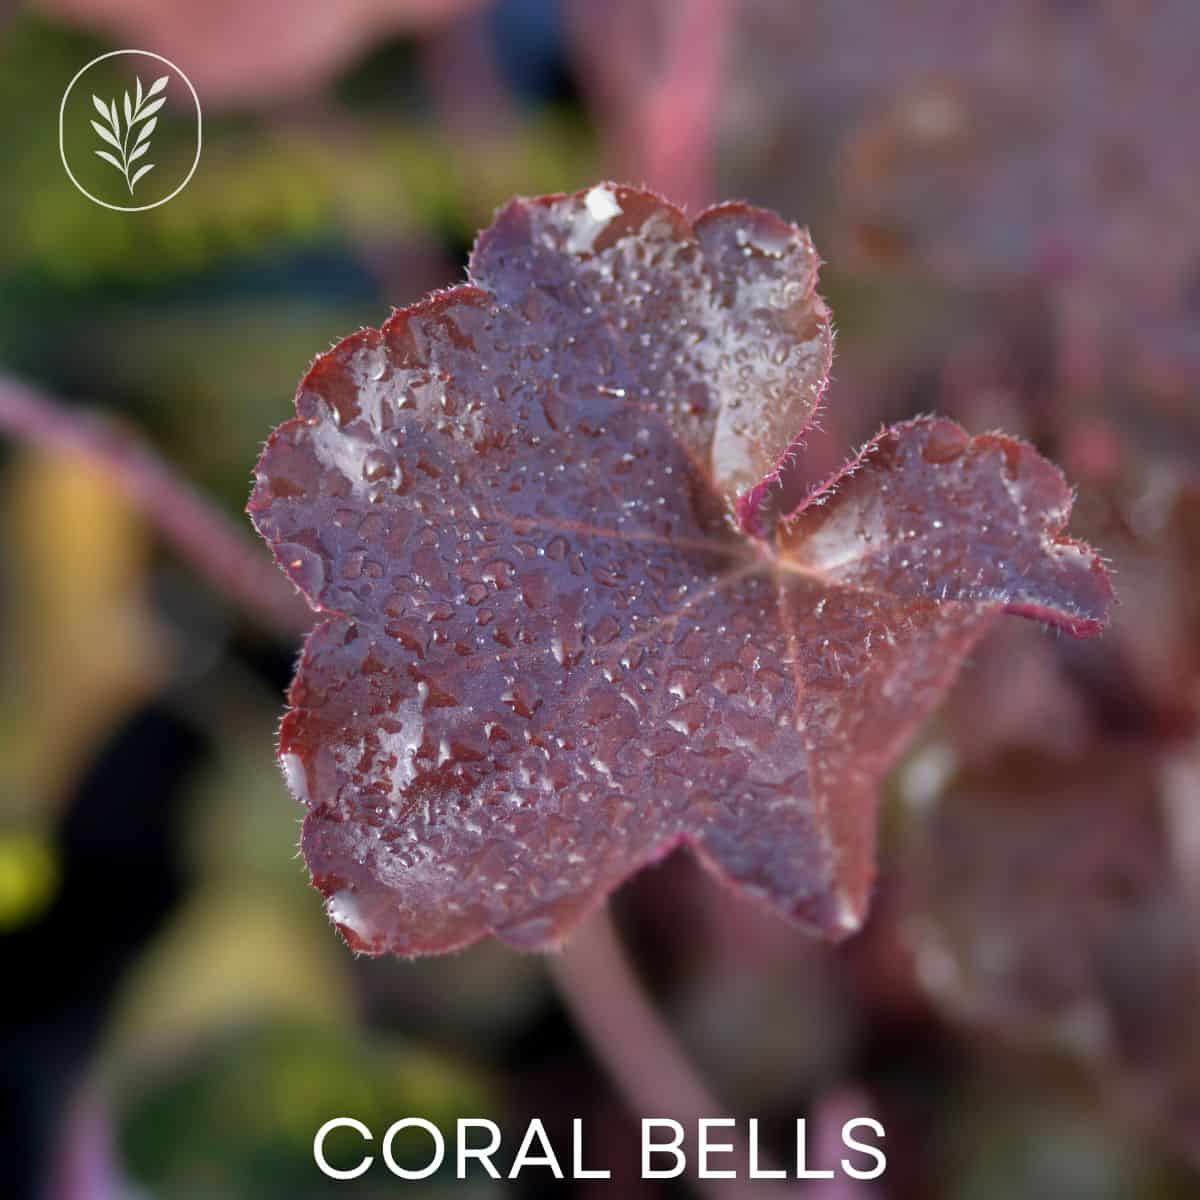 Coral bells via @home4theharvest